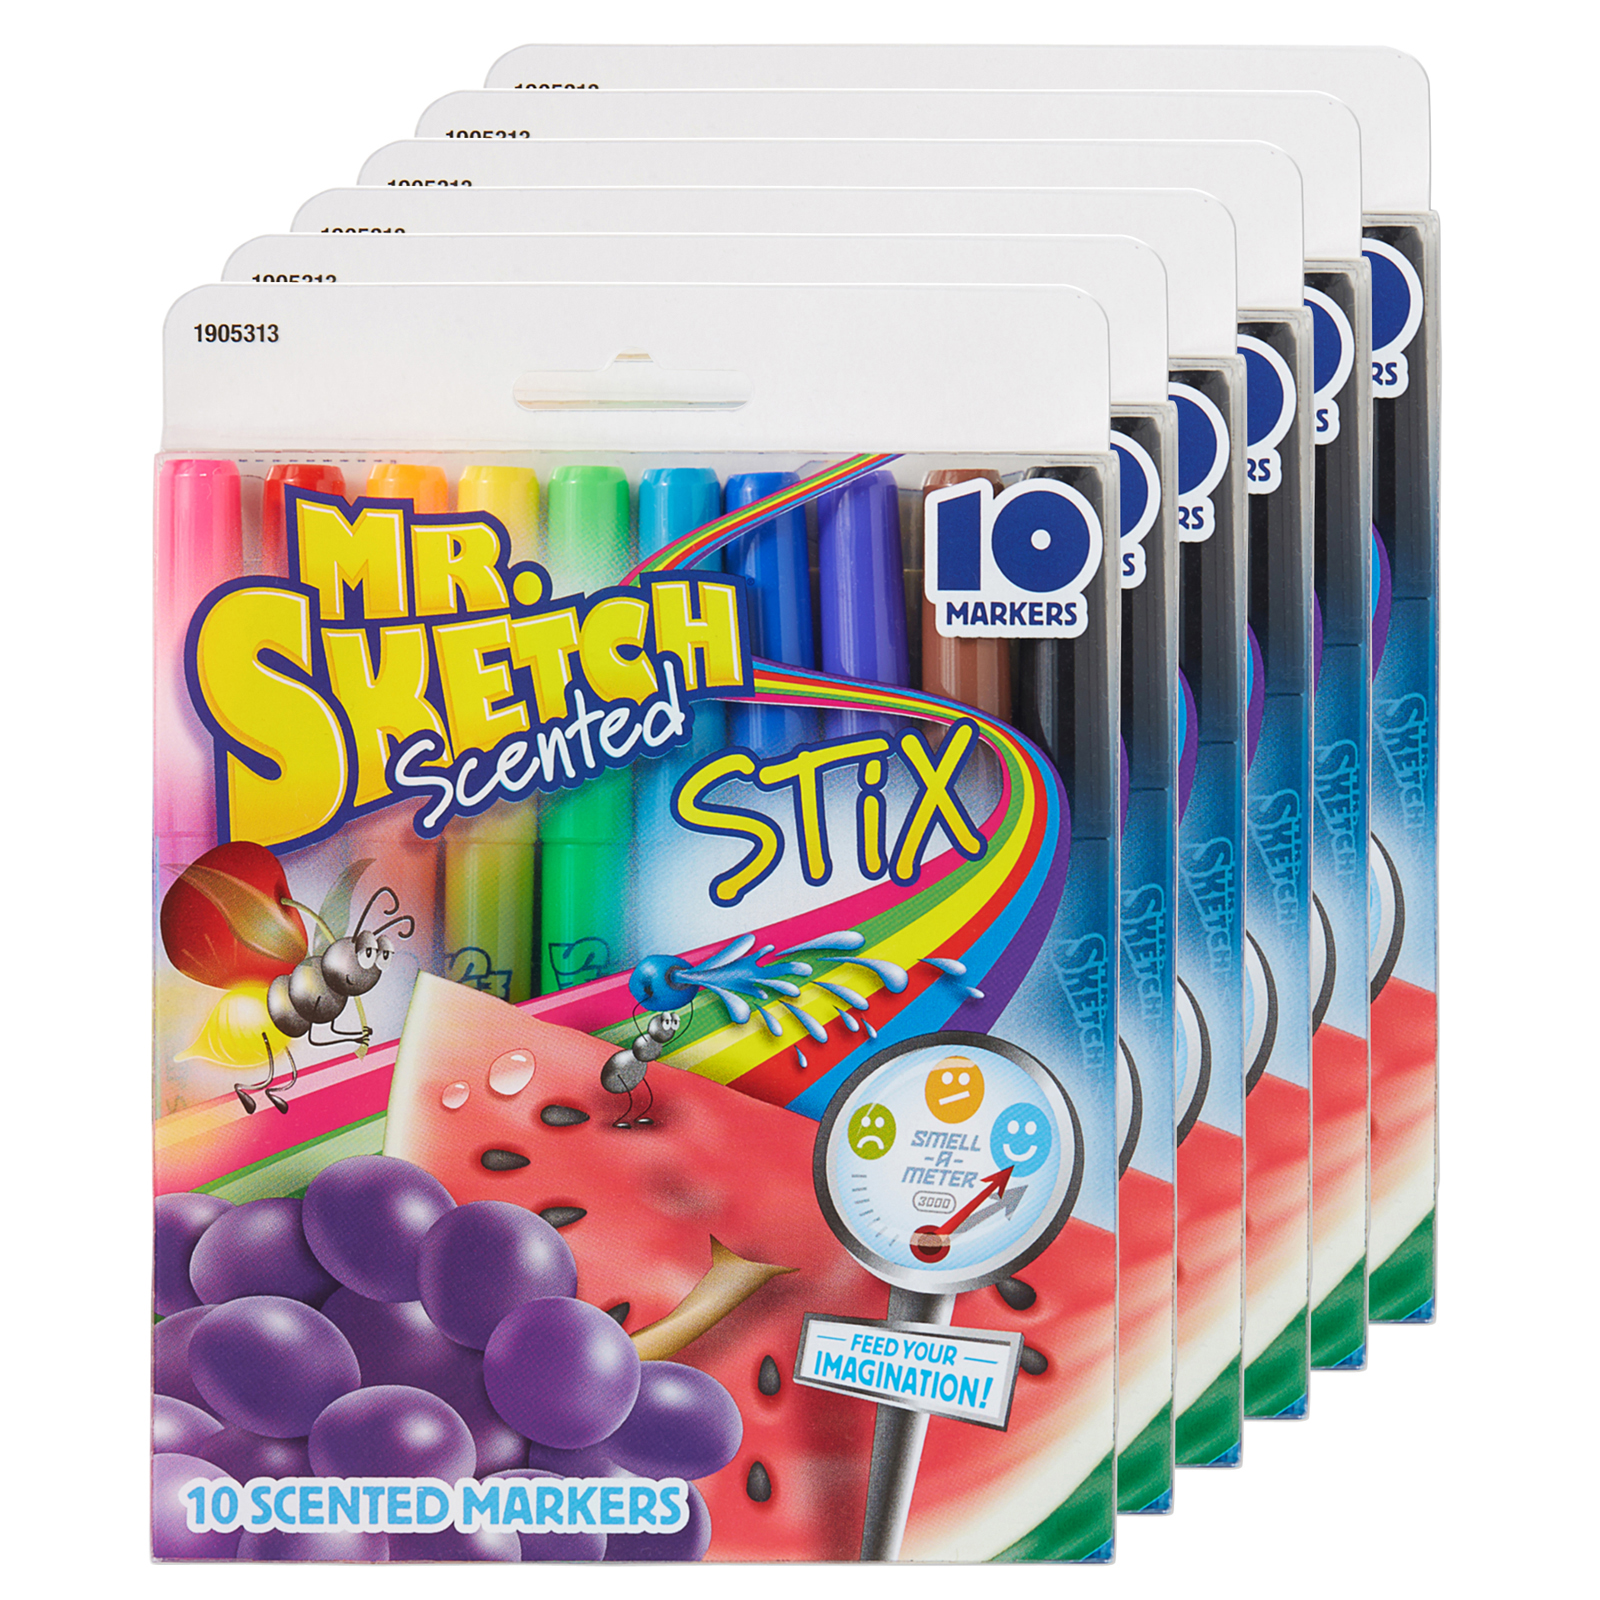 Mr. Sketch® Scented Stix Markers, 6 Packs of 10